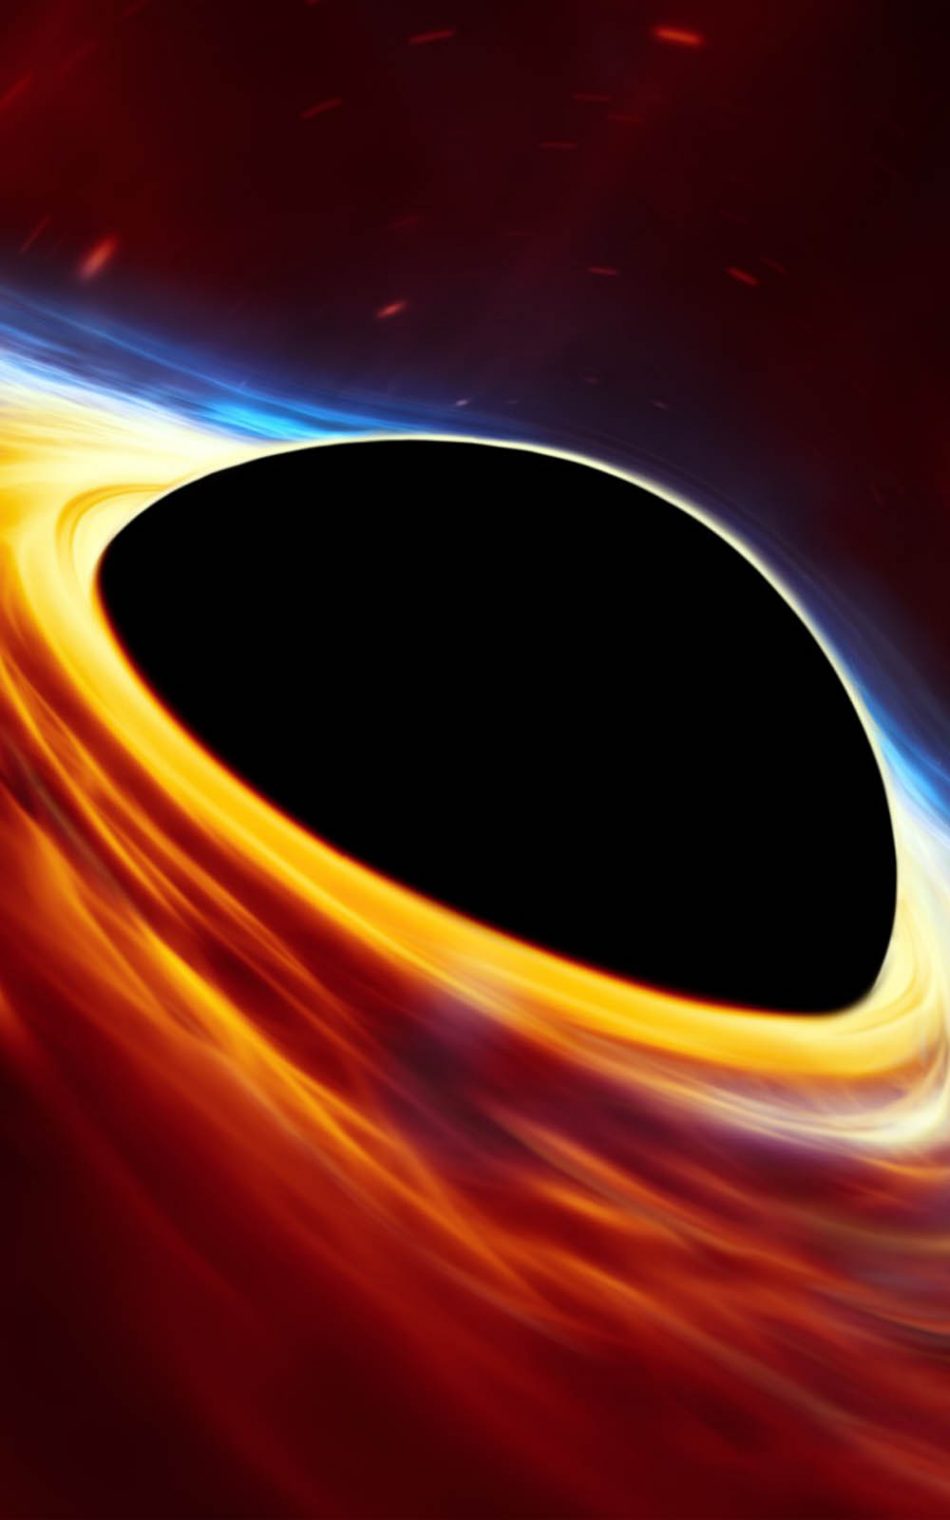 Gargantua black hole Wallpaper 4K Wormhole Interstellar Cosmos 9621